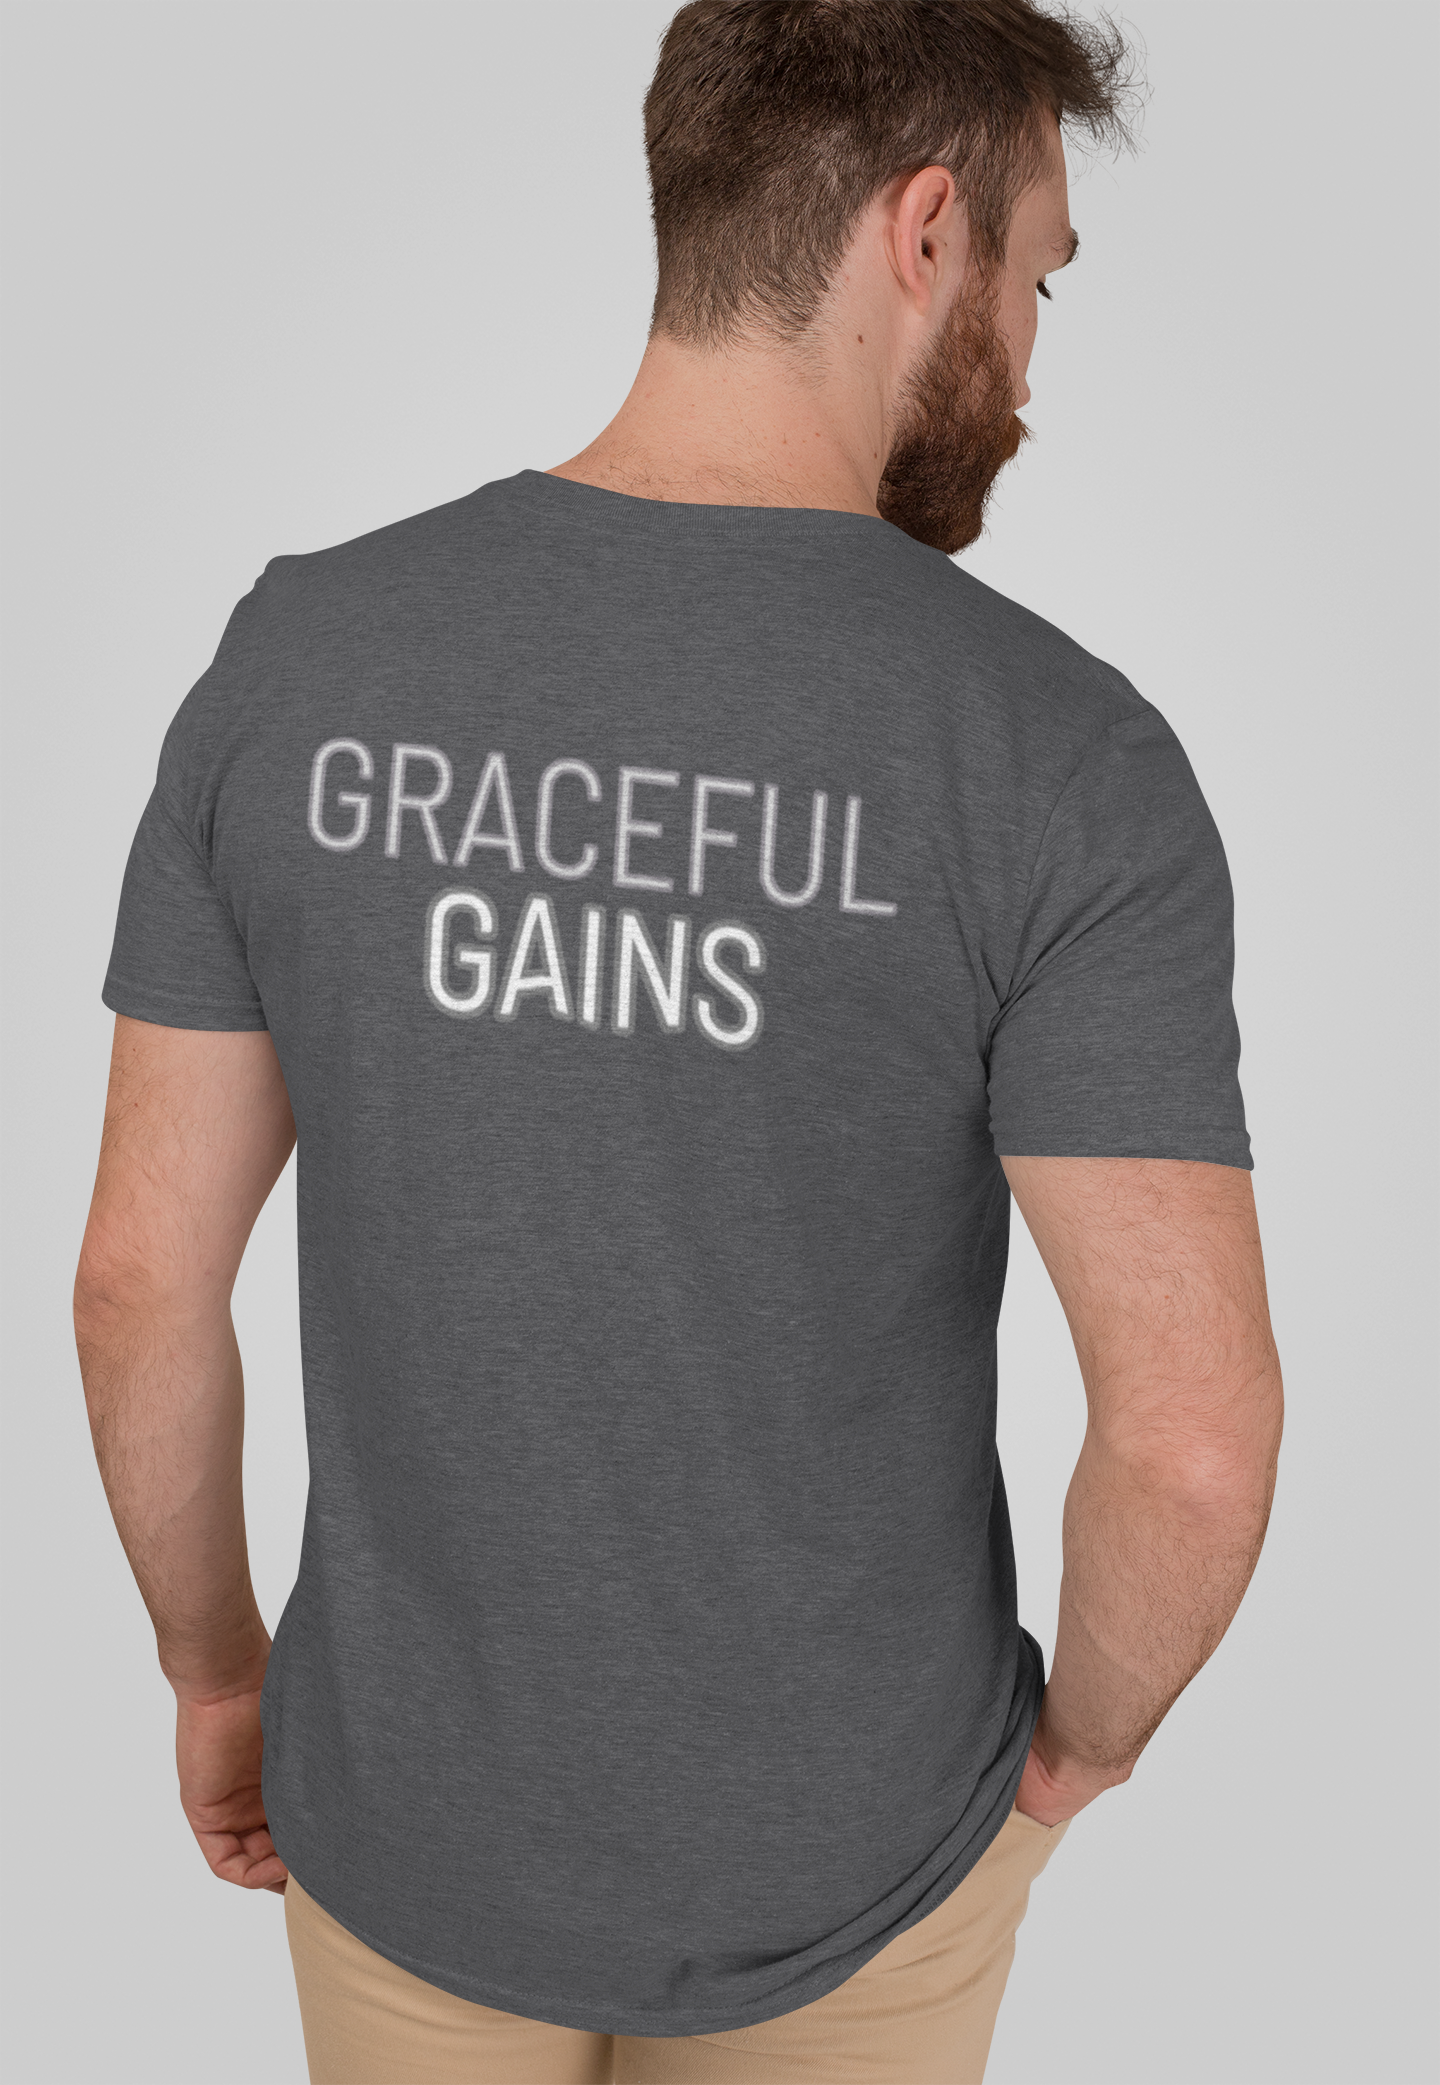 Graceful Gains